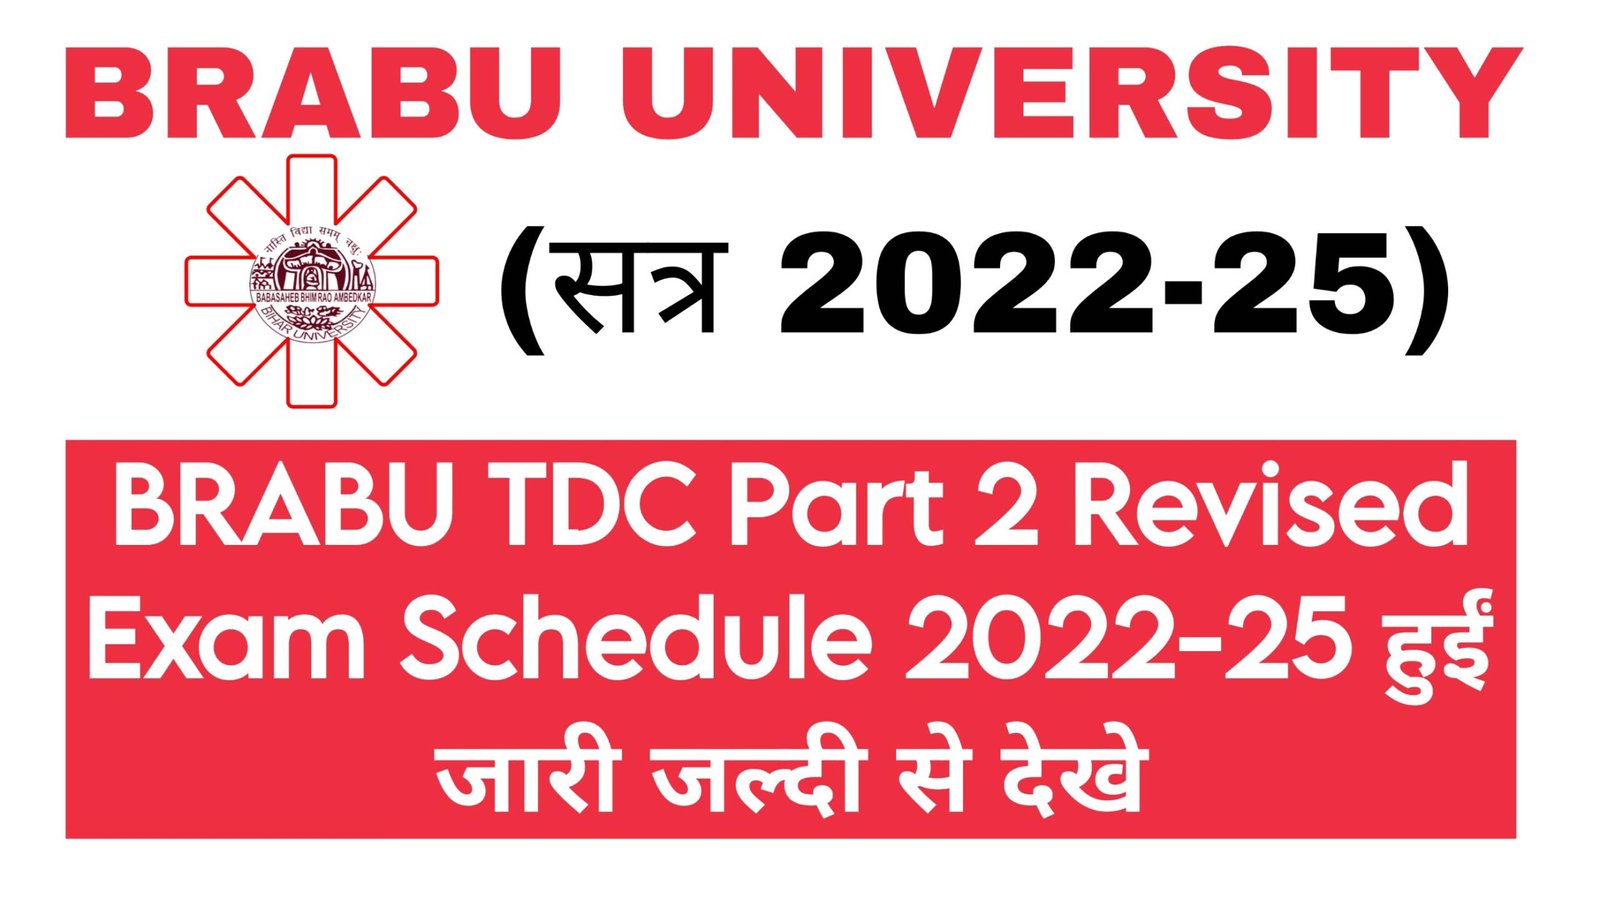 BRABU TDC Part 2 Revised Exam Schedule 2022-25